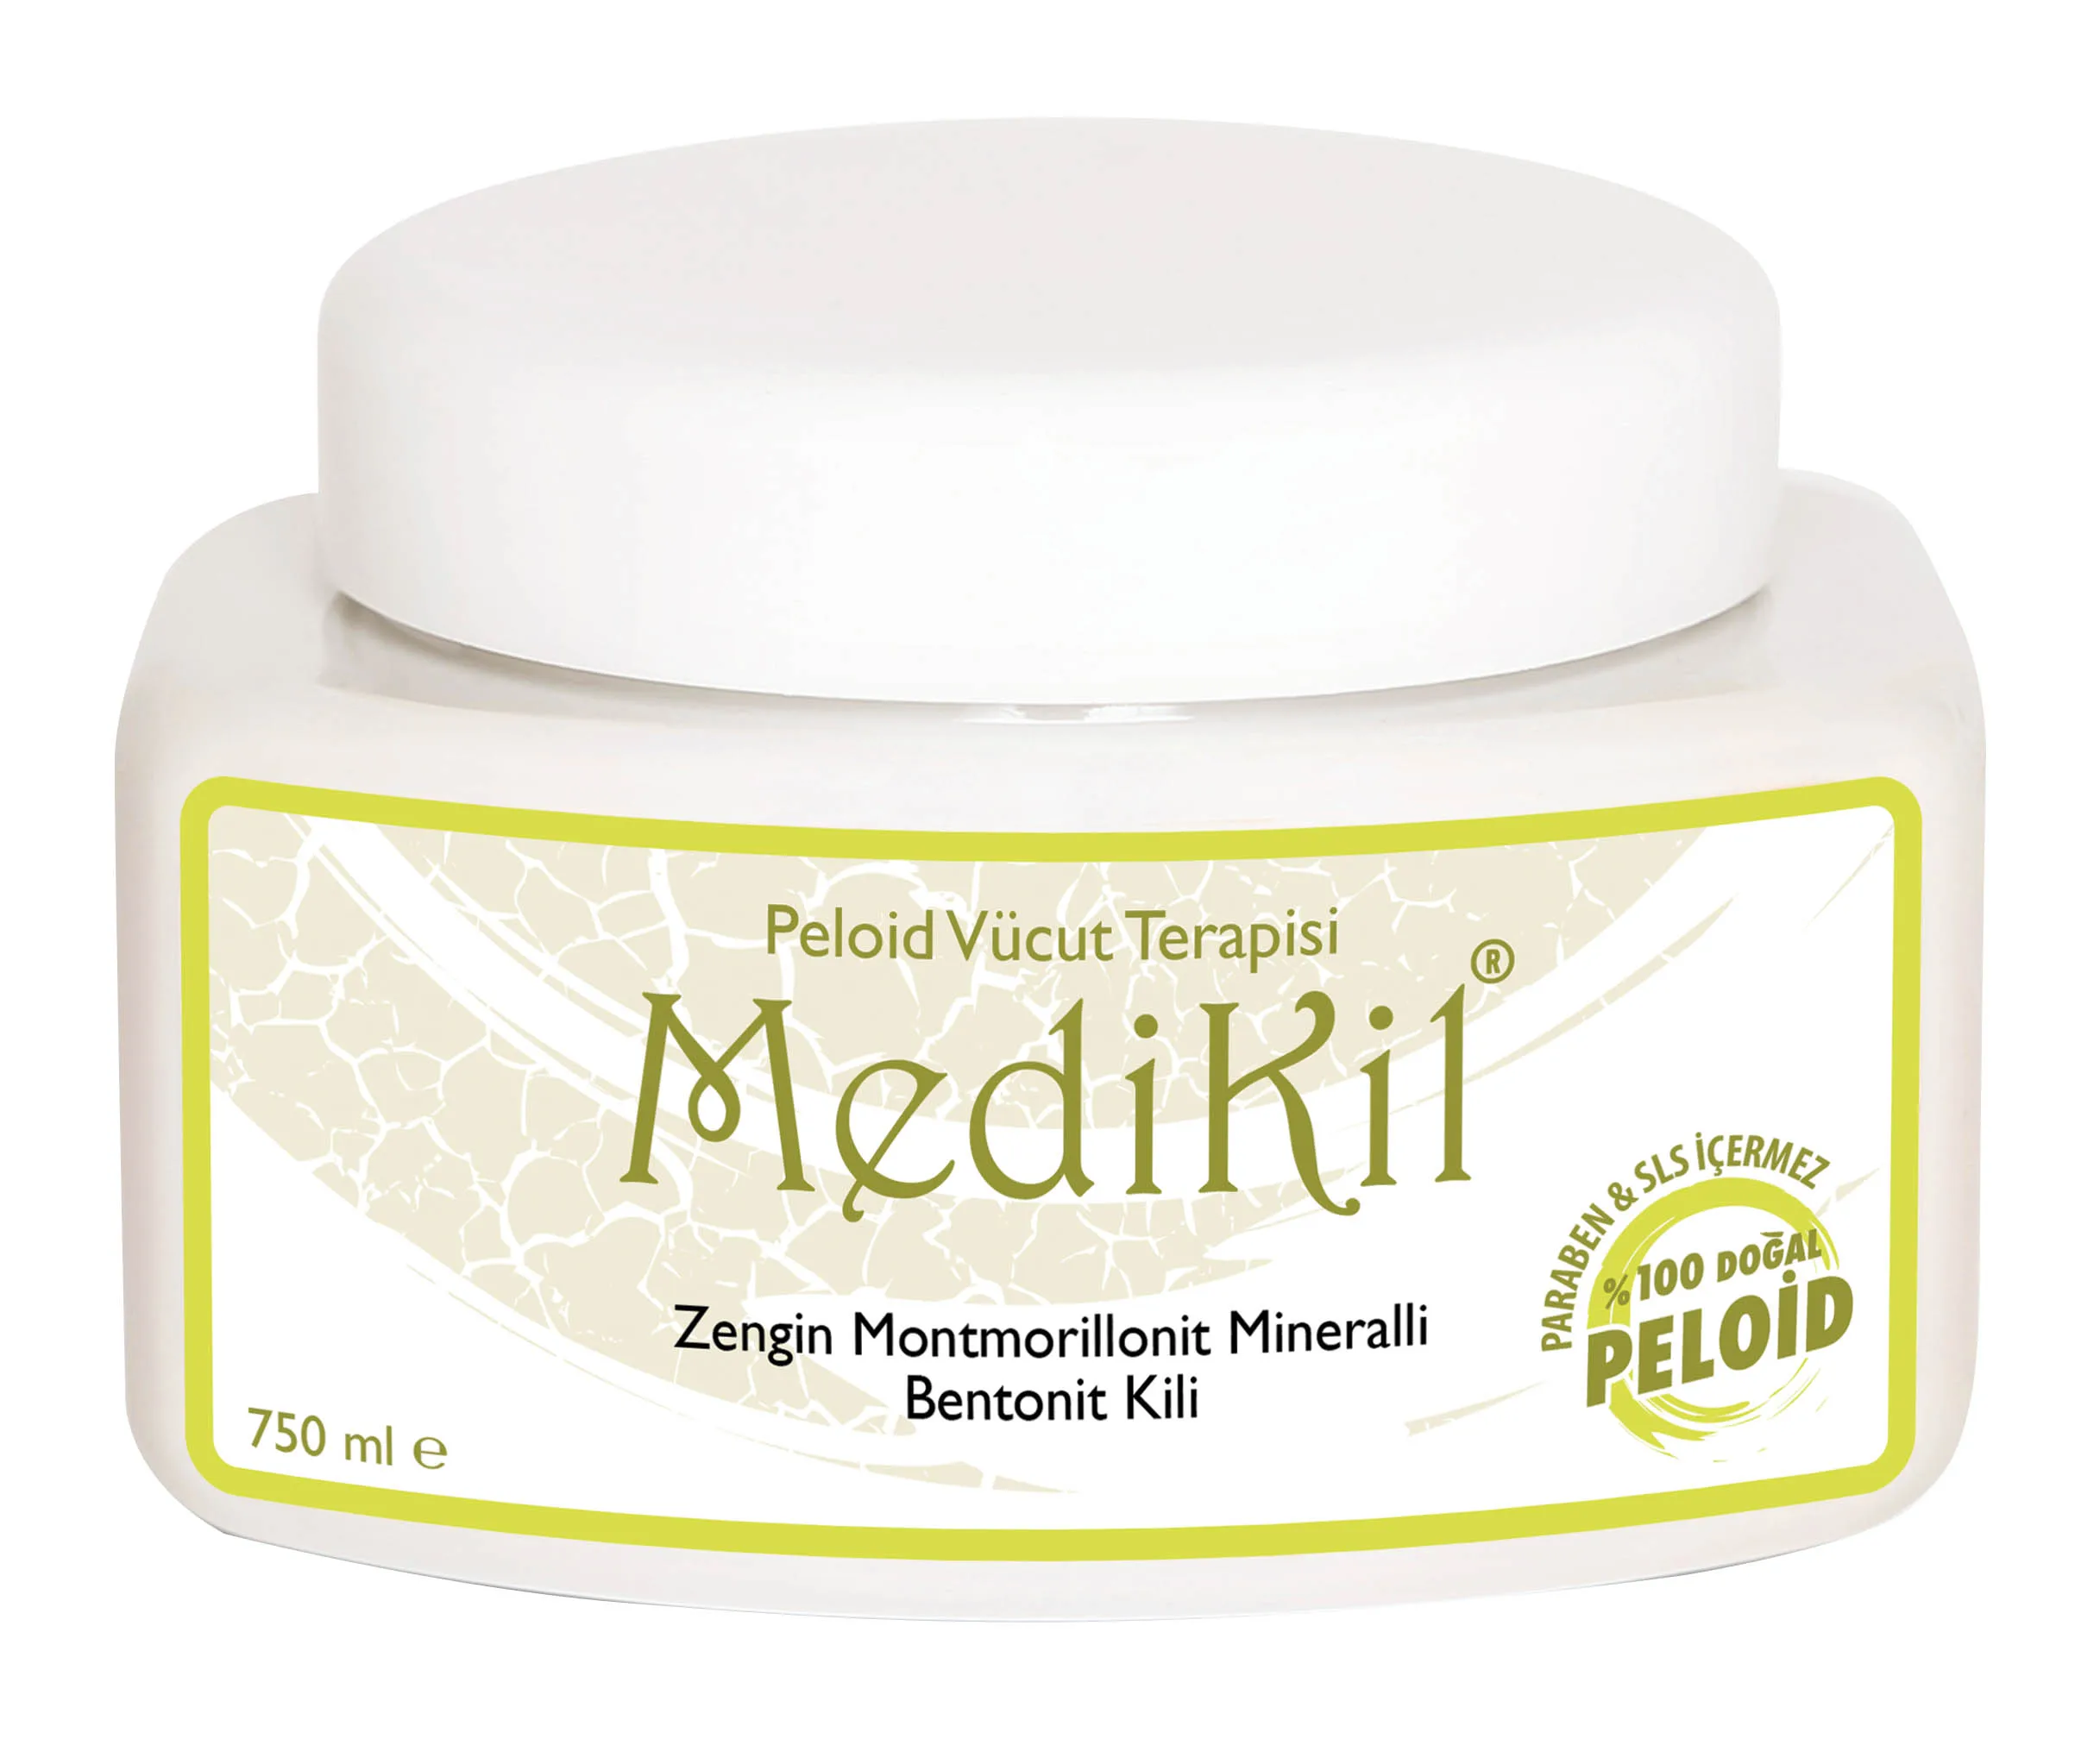 Medicil Body Therapy-rich Montmorillonite Mineral 750ml Treatment Mask Nourishing Beauty Health Bentonite Clay Reliable Pure